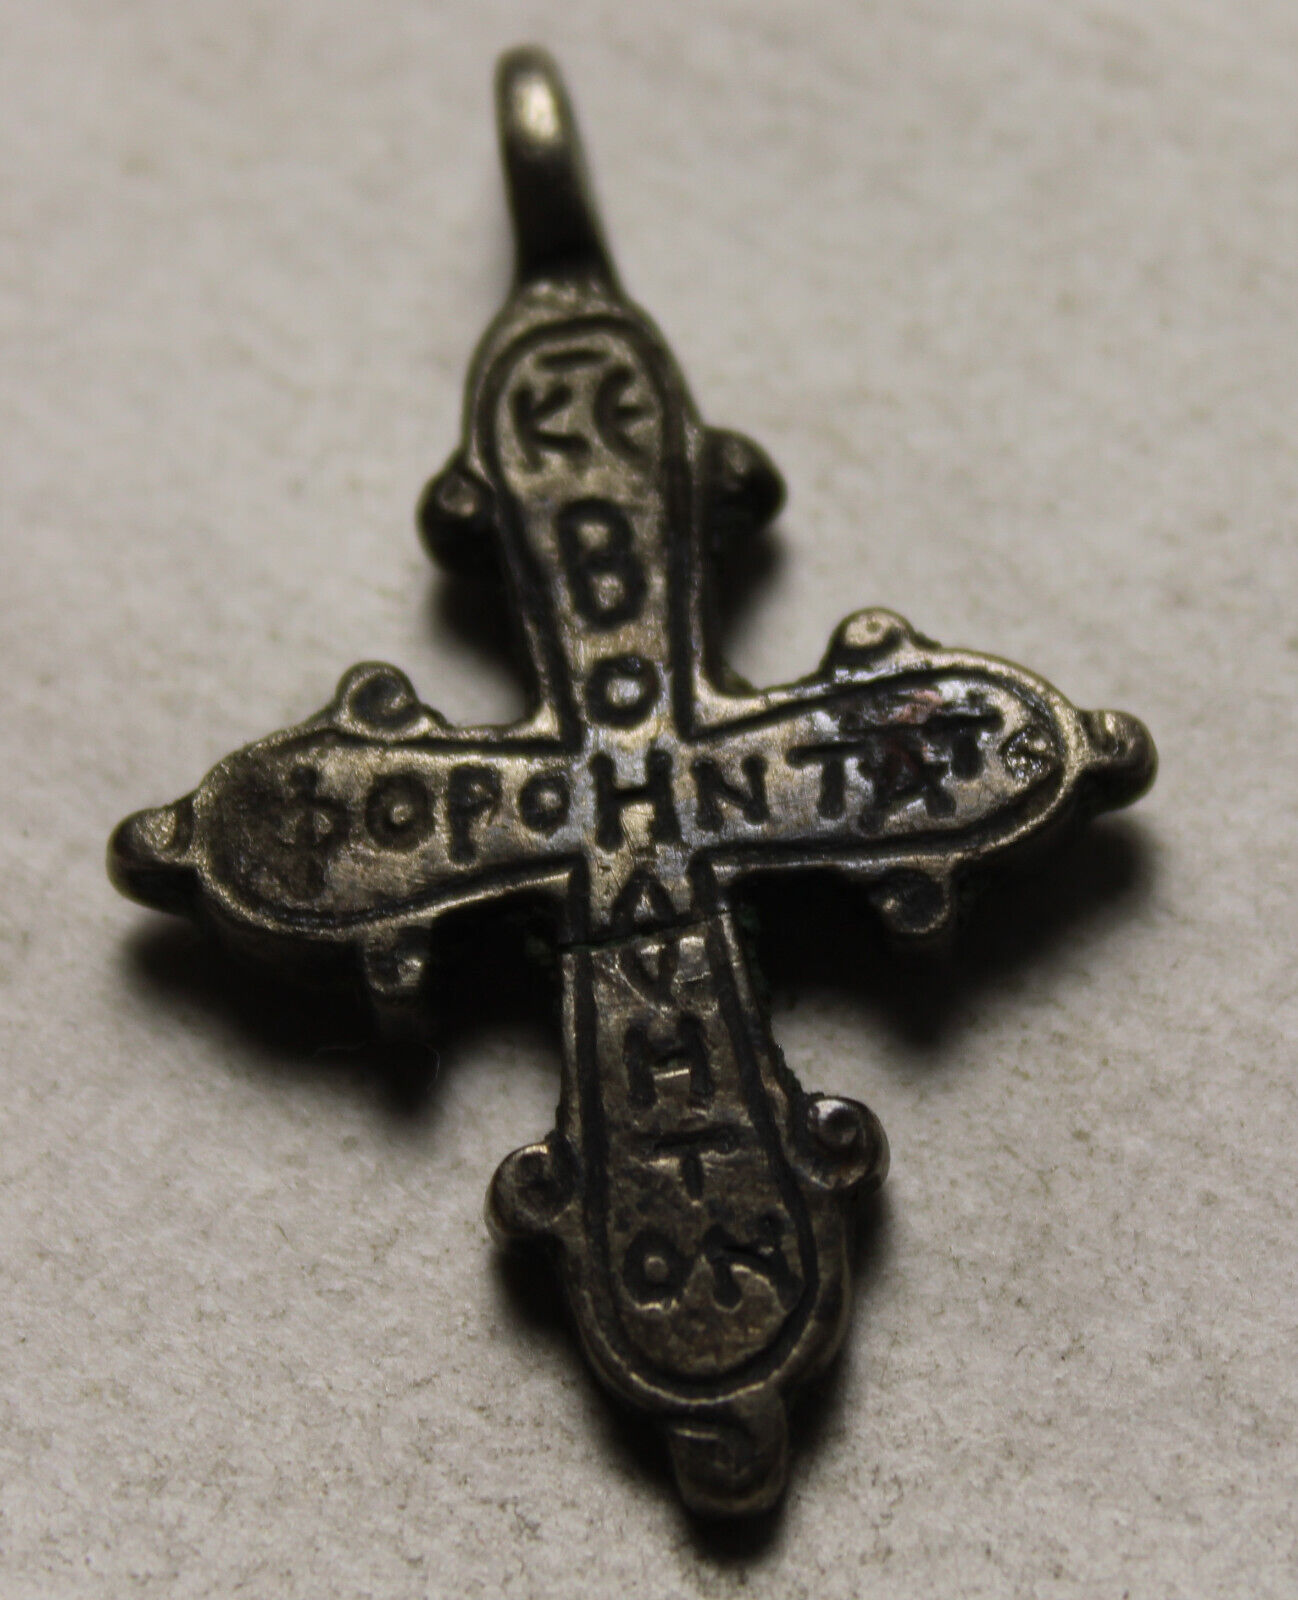 Rare genuine ancient silver cross pendant Greek inscription artifact intact 13AD